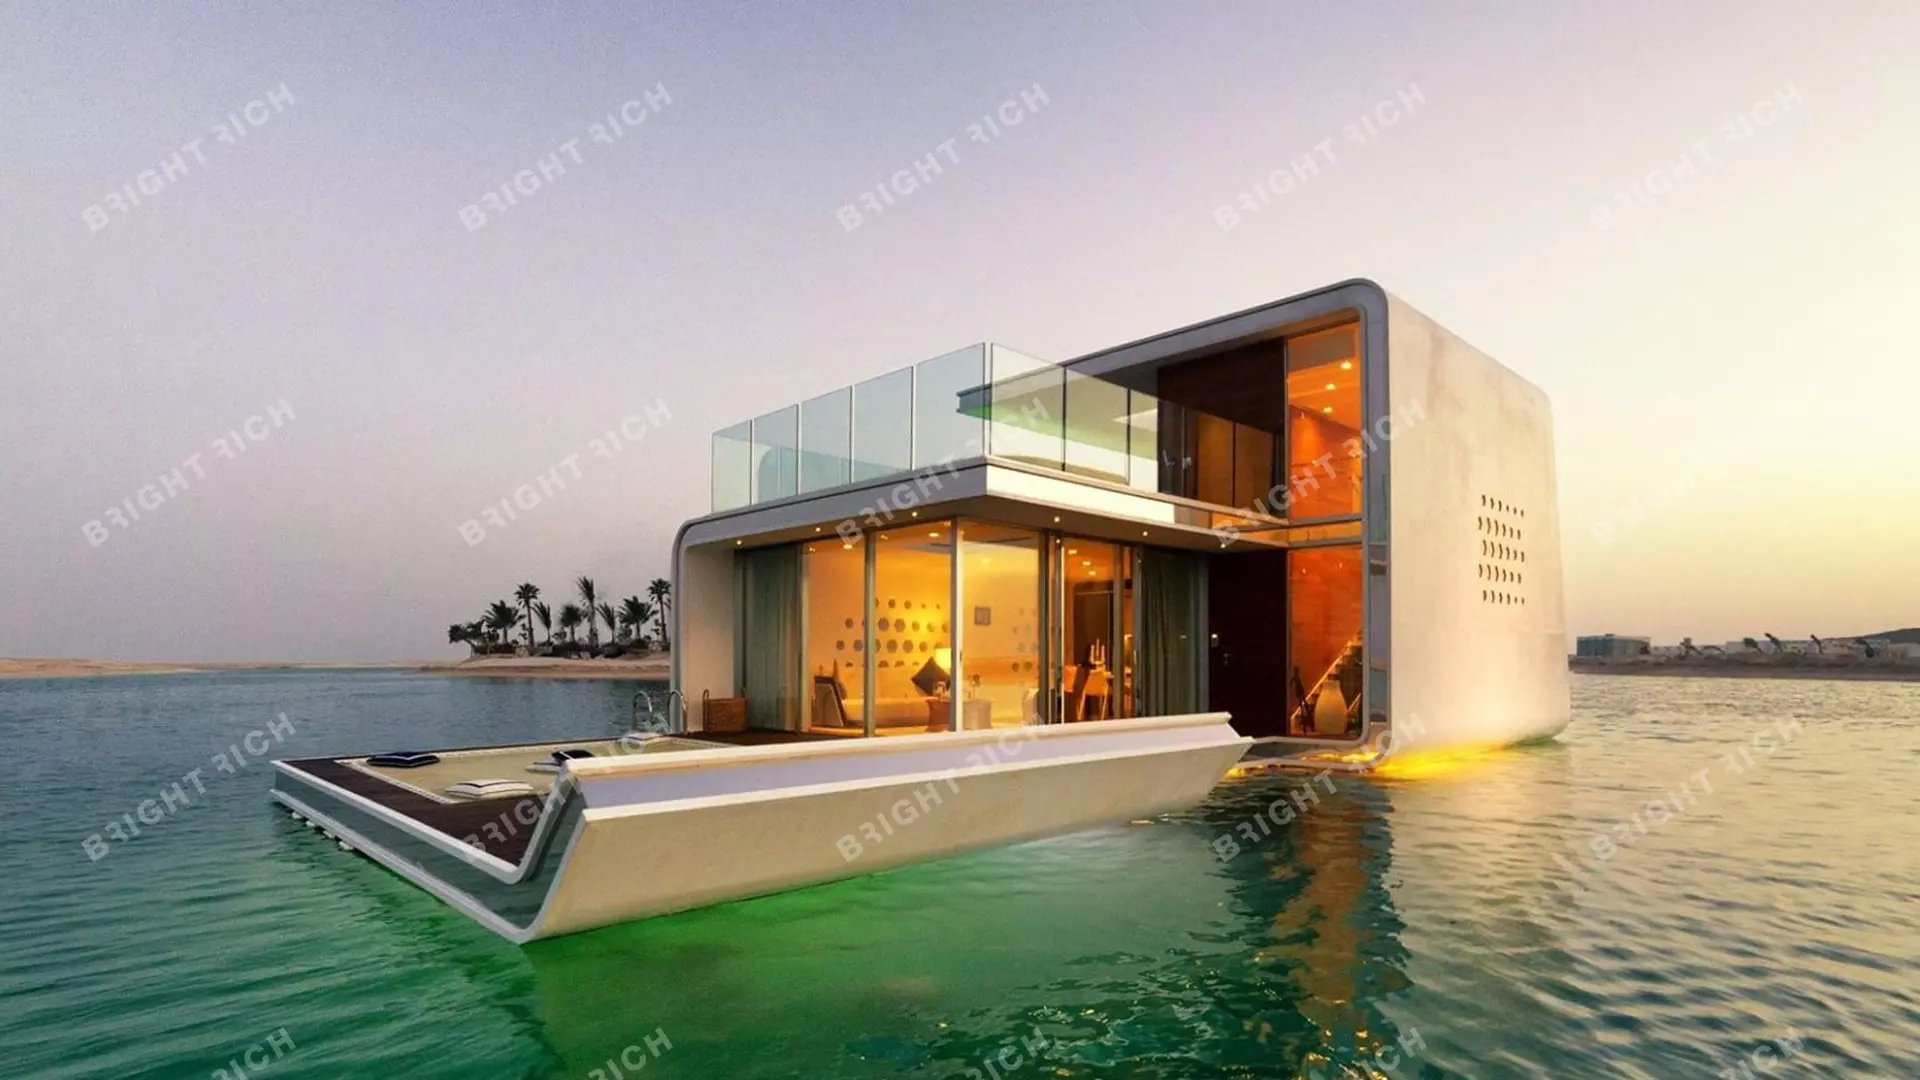 The Floating Seahorse, апарт-комплекс в Дубае - 1